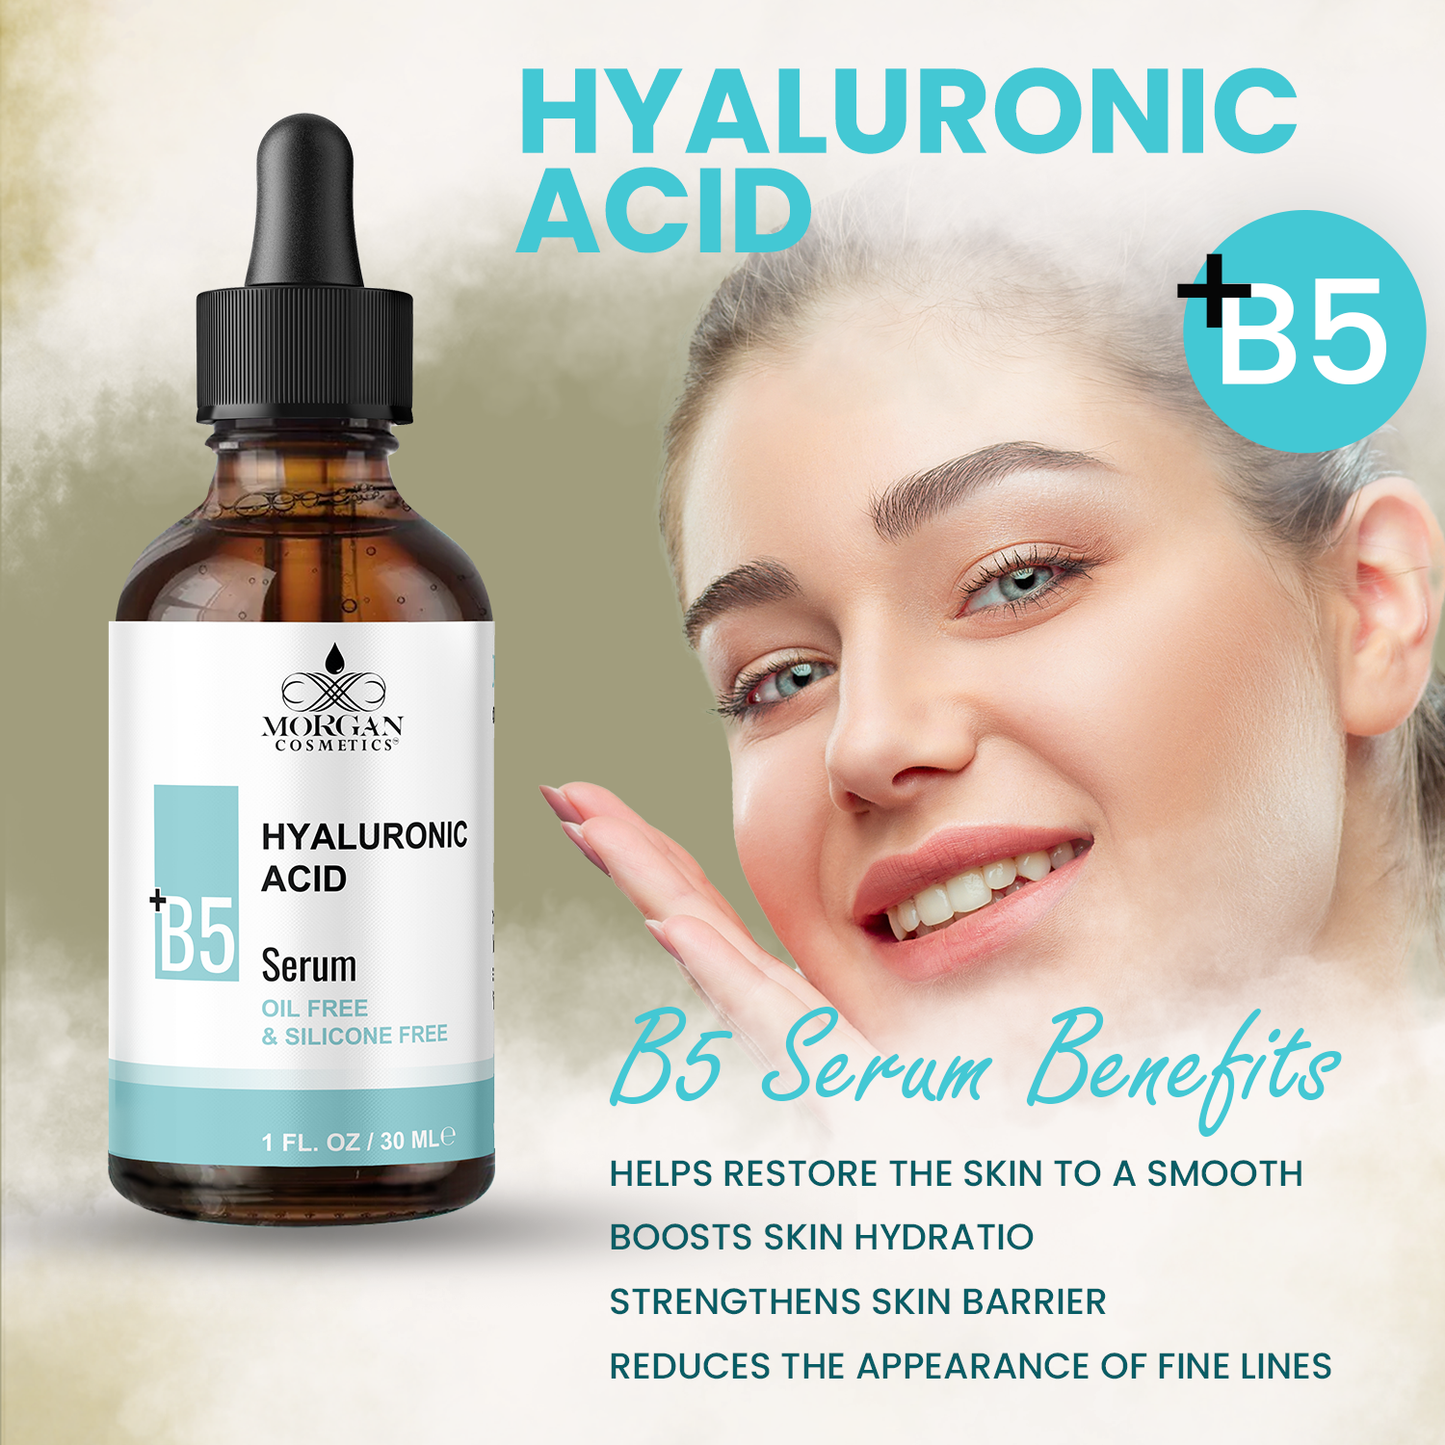 Hyaluronic Acid with B5 Serum